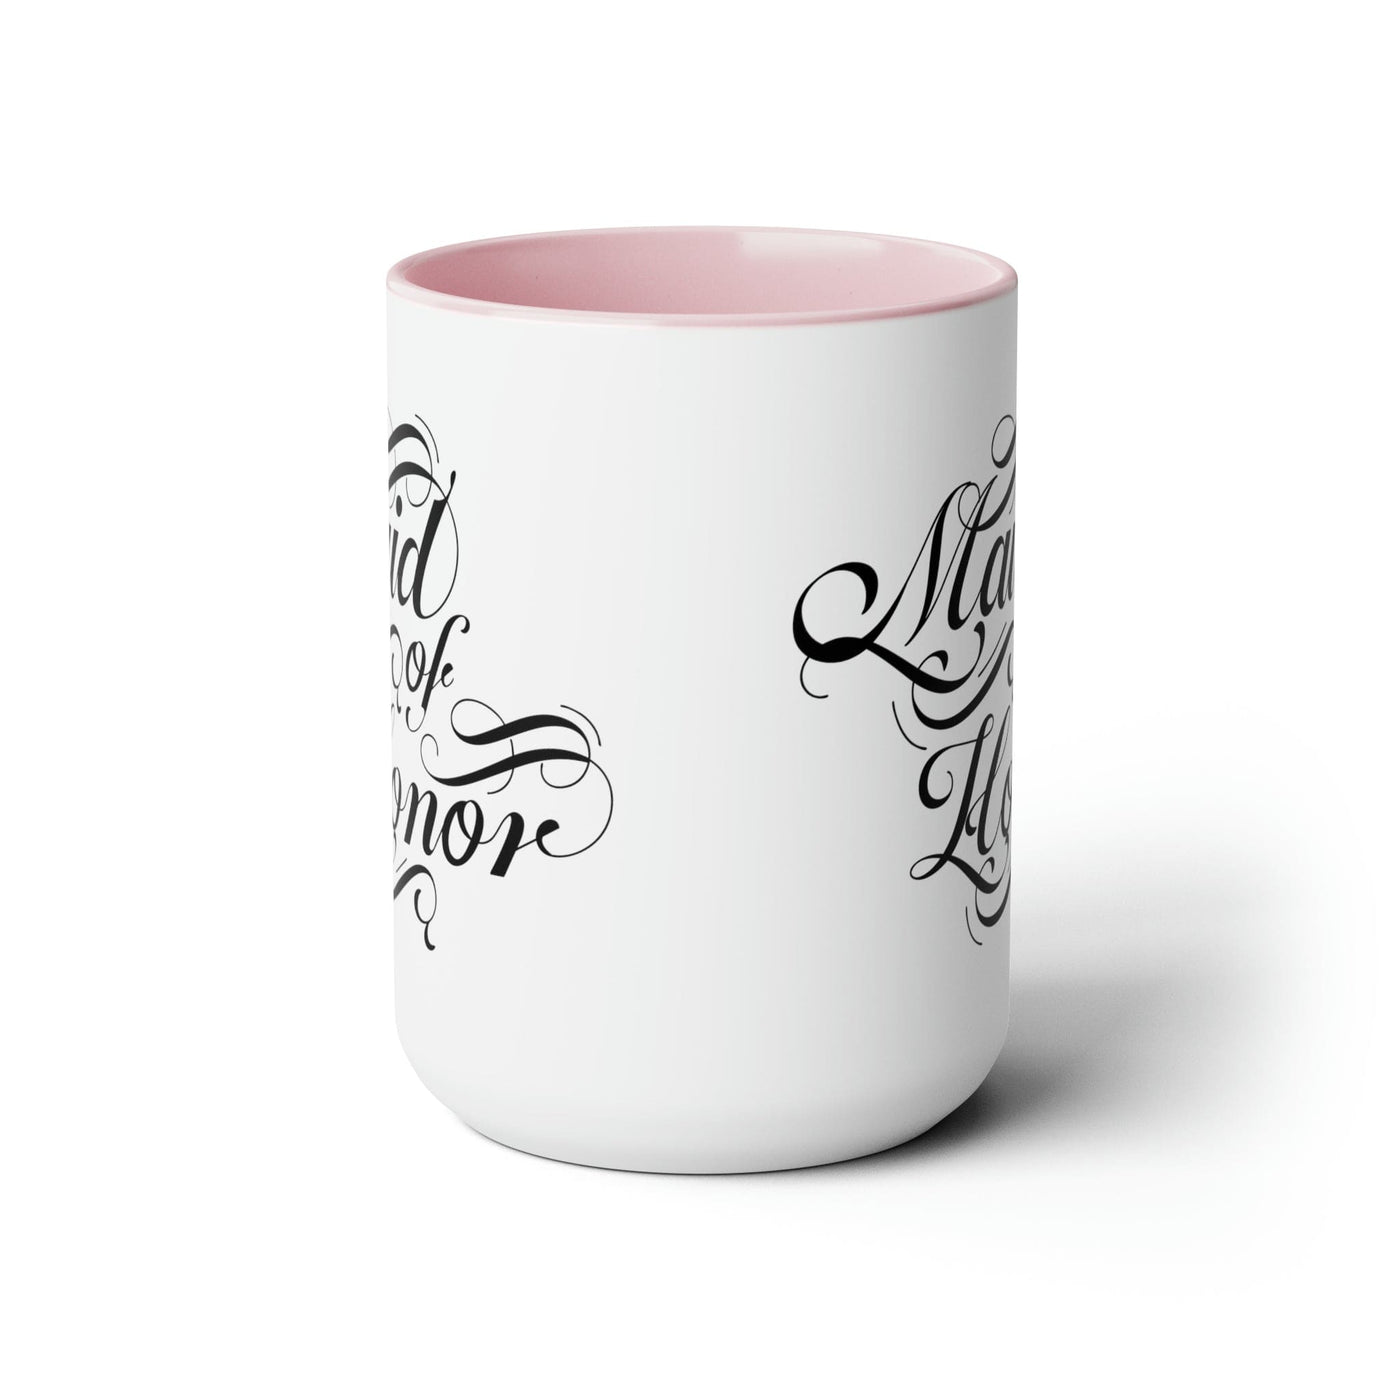 Accent Ceramic Coffee Mug 15oz - Maid Of Honor Wedding Bridal Party - Decorative